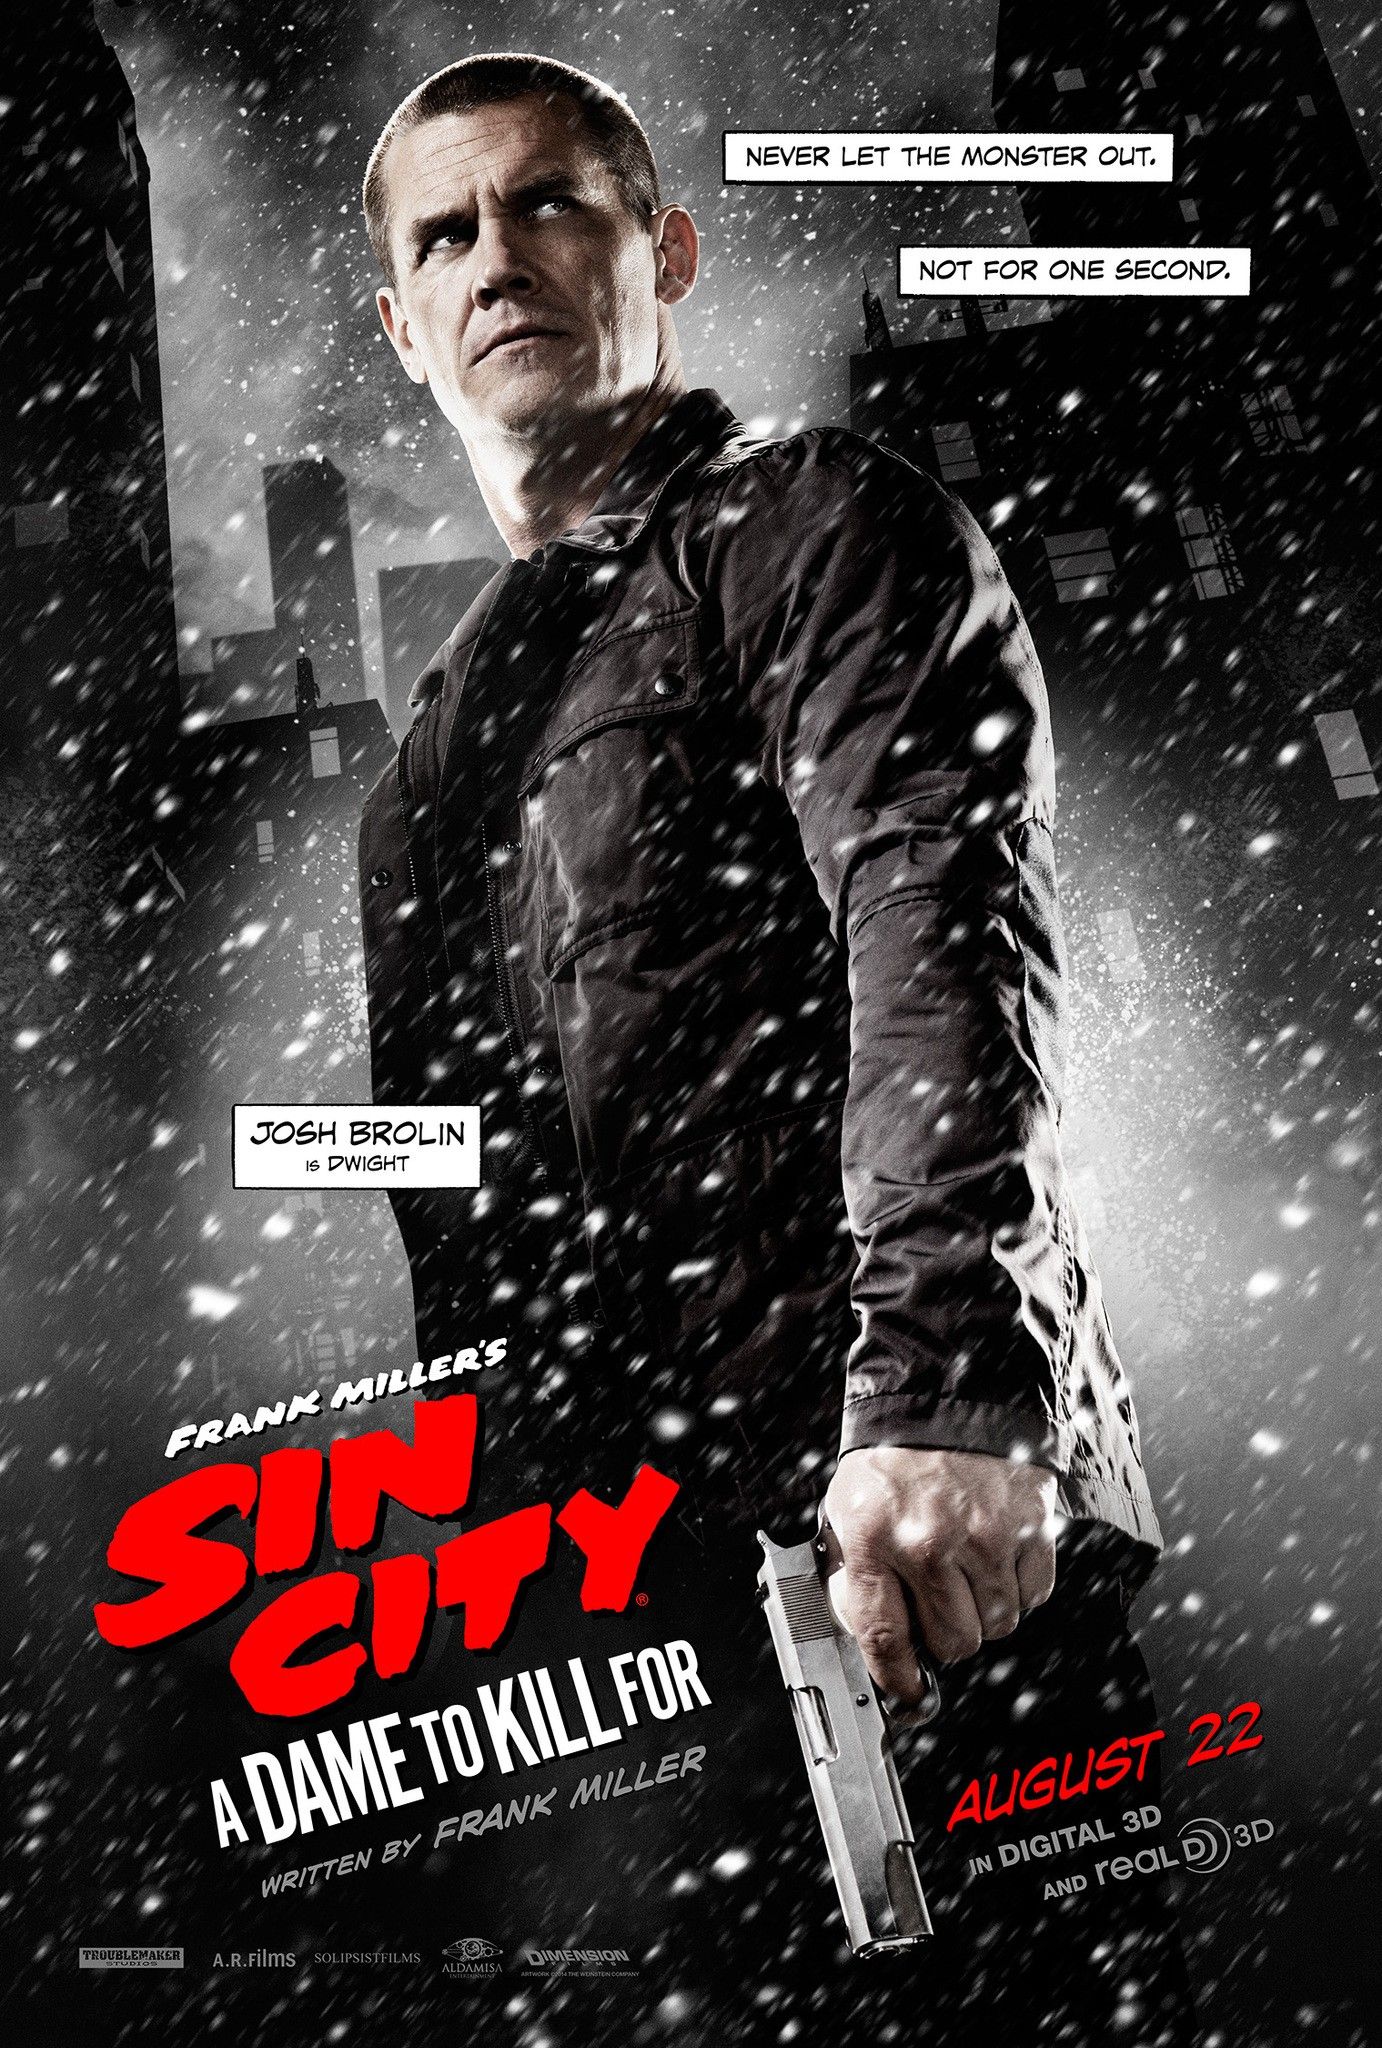 Josj Brolin character poster Sin City 2